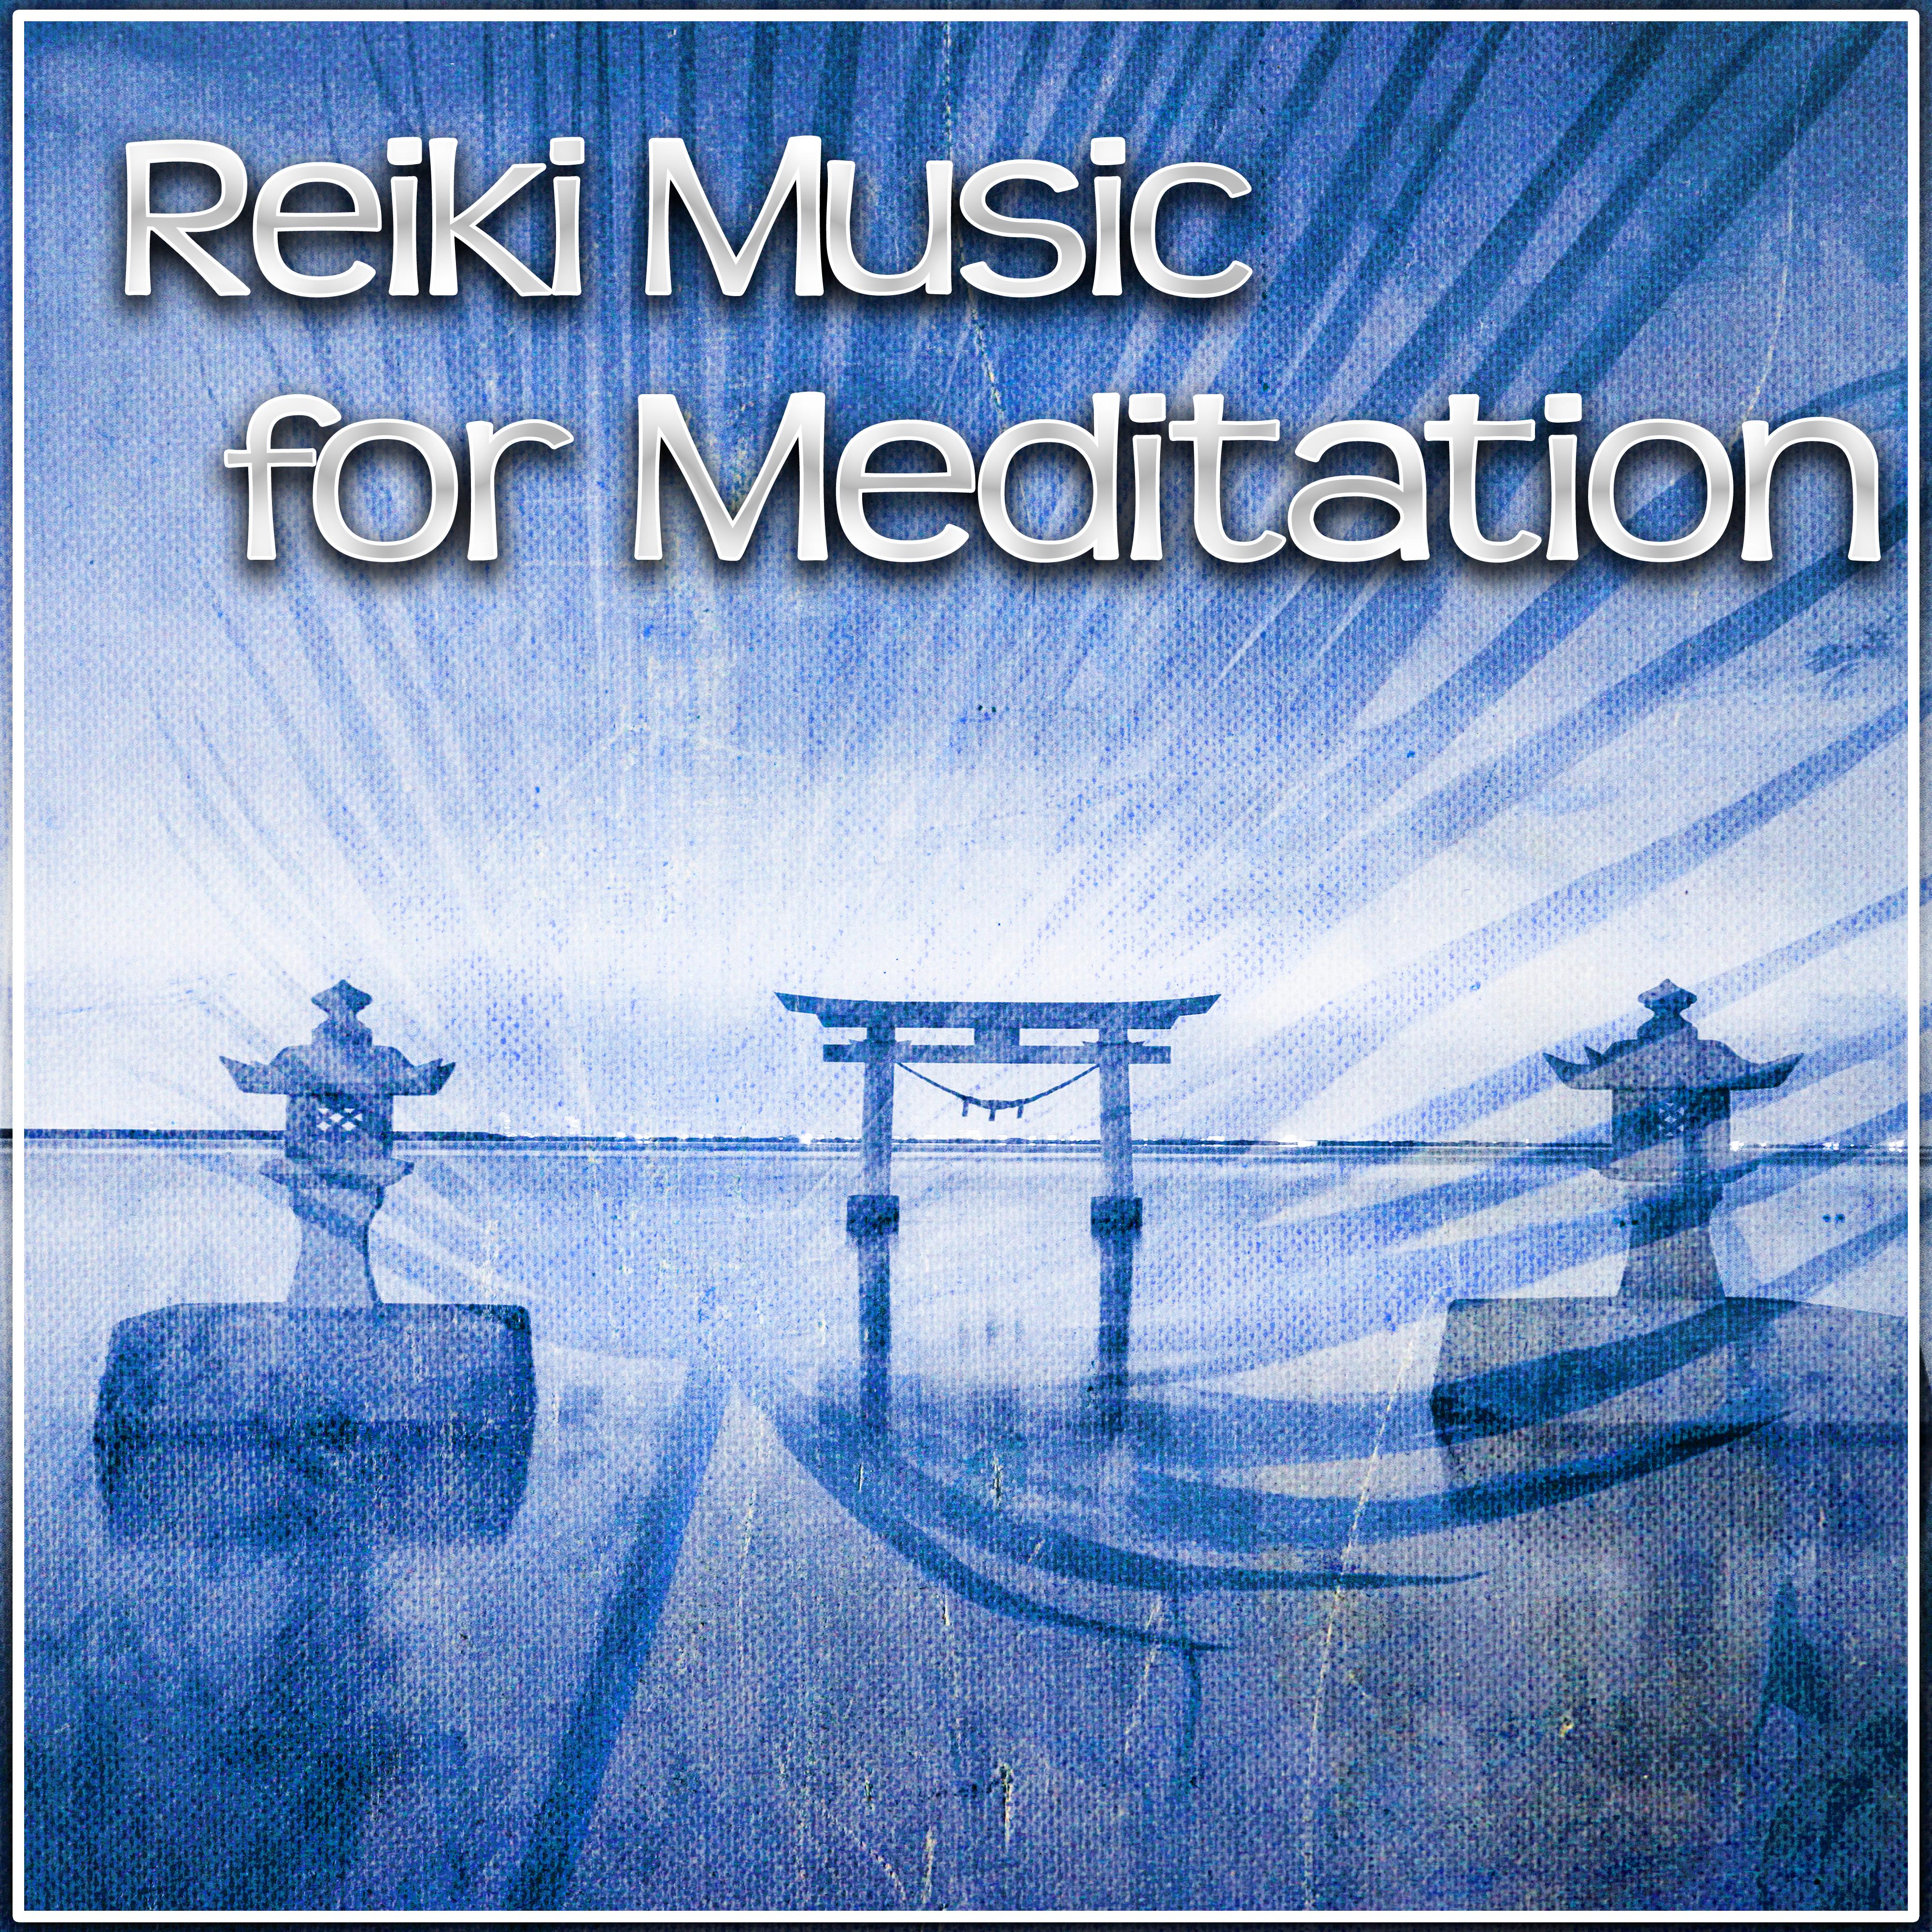 Reiki Music for Meditation – Reiki Music for Yoga Healing, Total Relaxation & Pure Meditation, Pilates, Nature Sounds